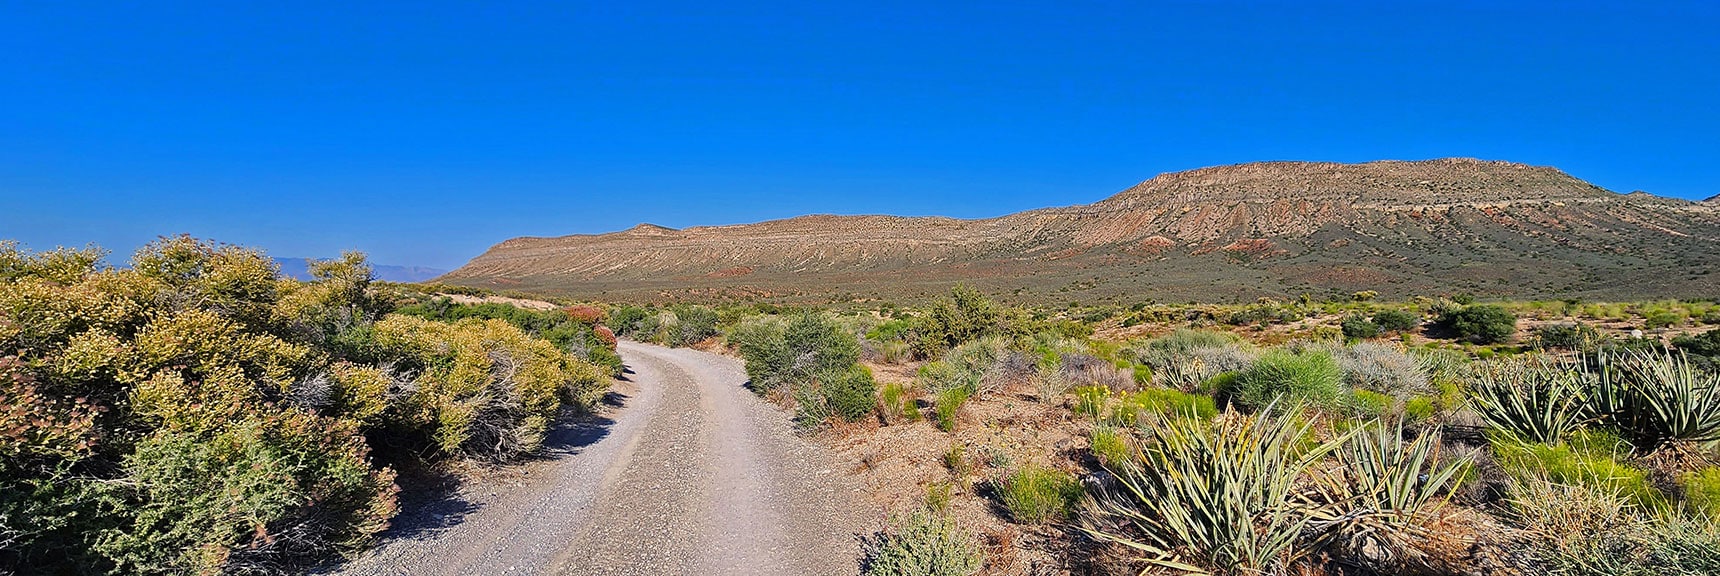 An Important Landmark for Wilderness Navigation Seen from Distant High Points | Landmark Bluff | Lovell Canyon, Nevada